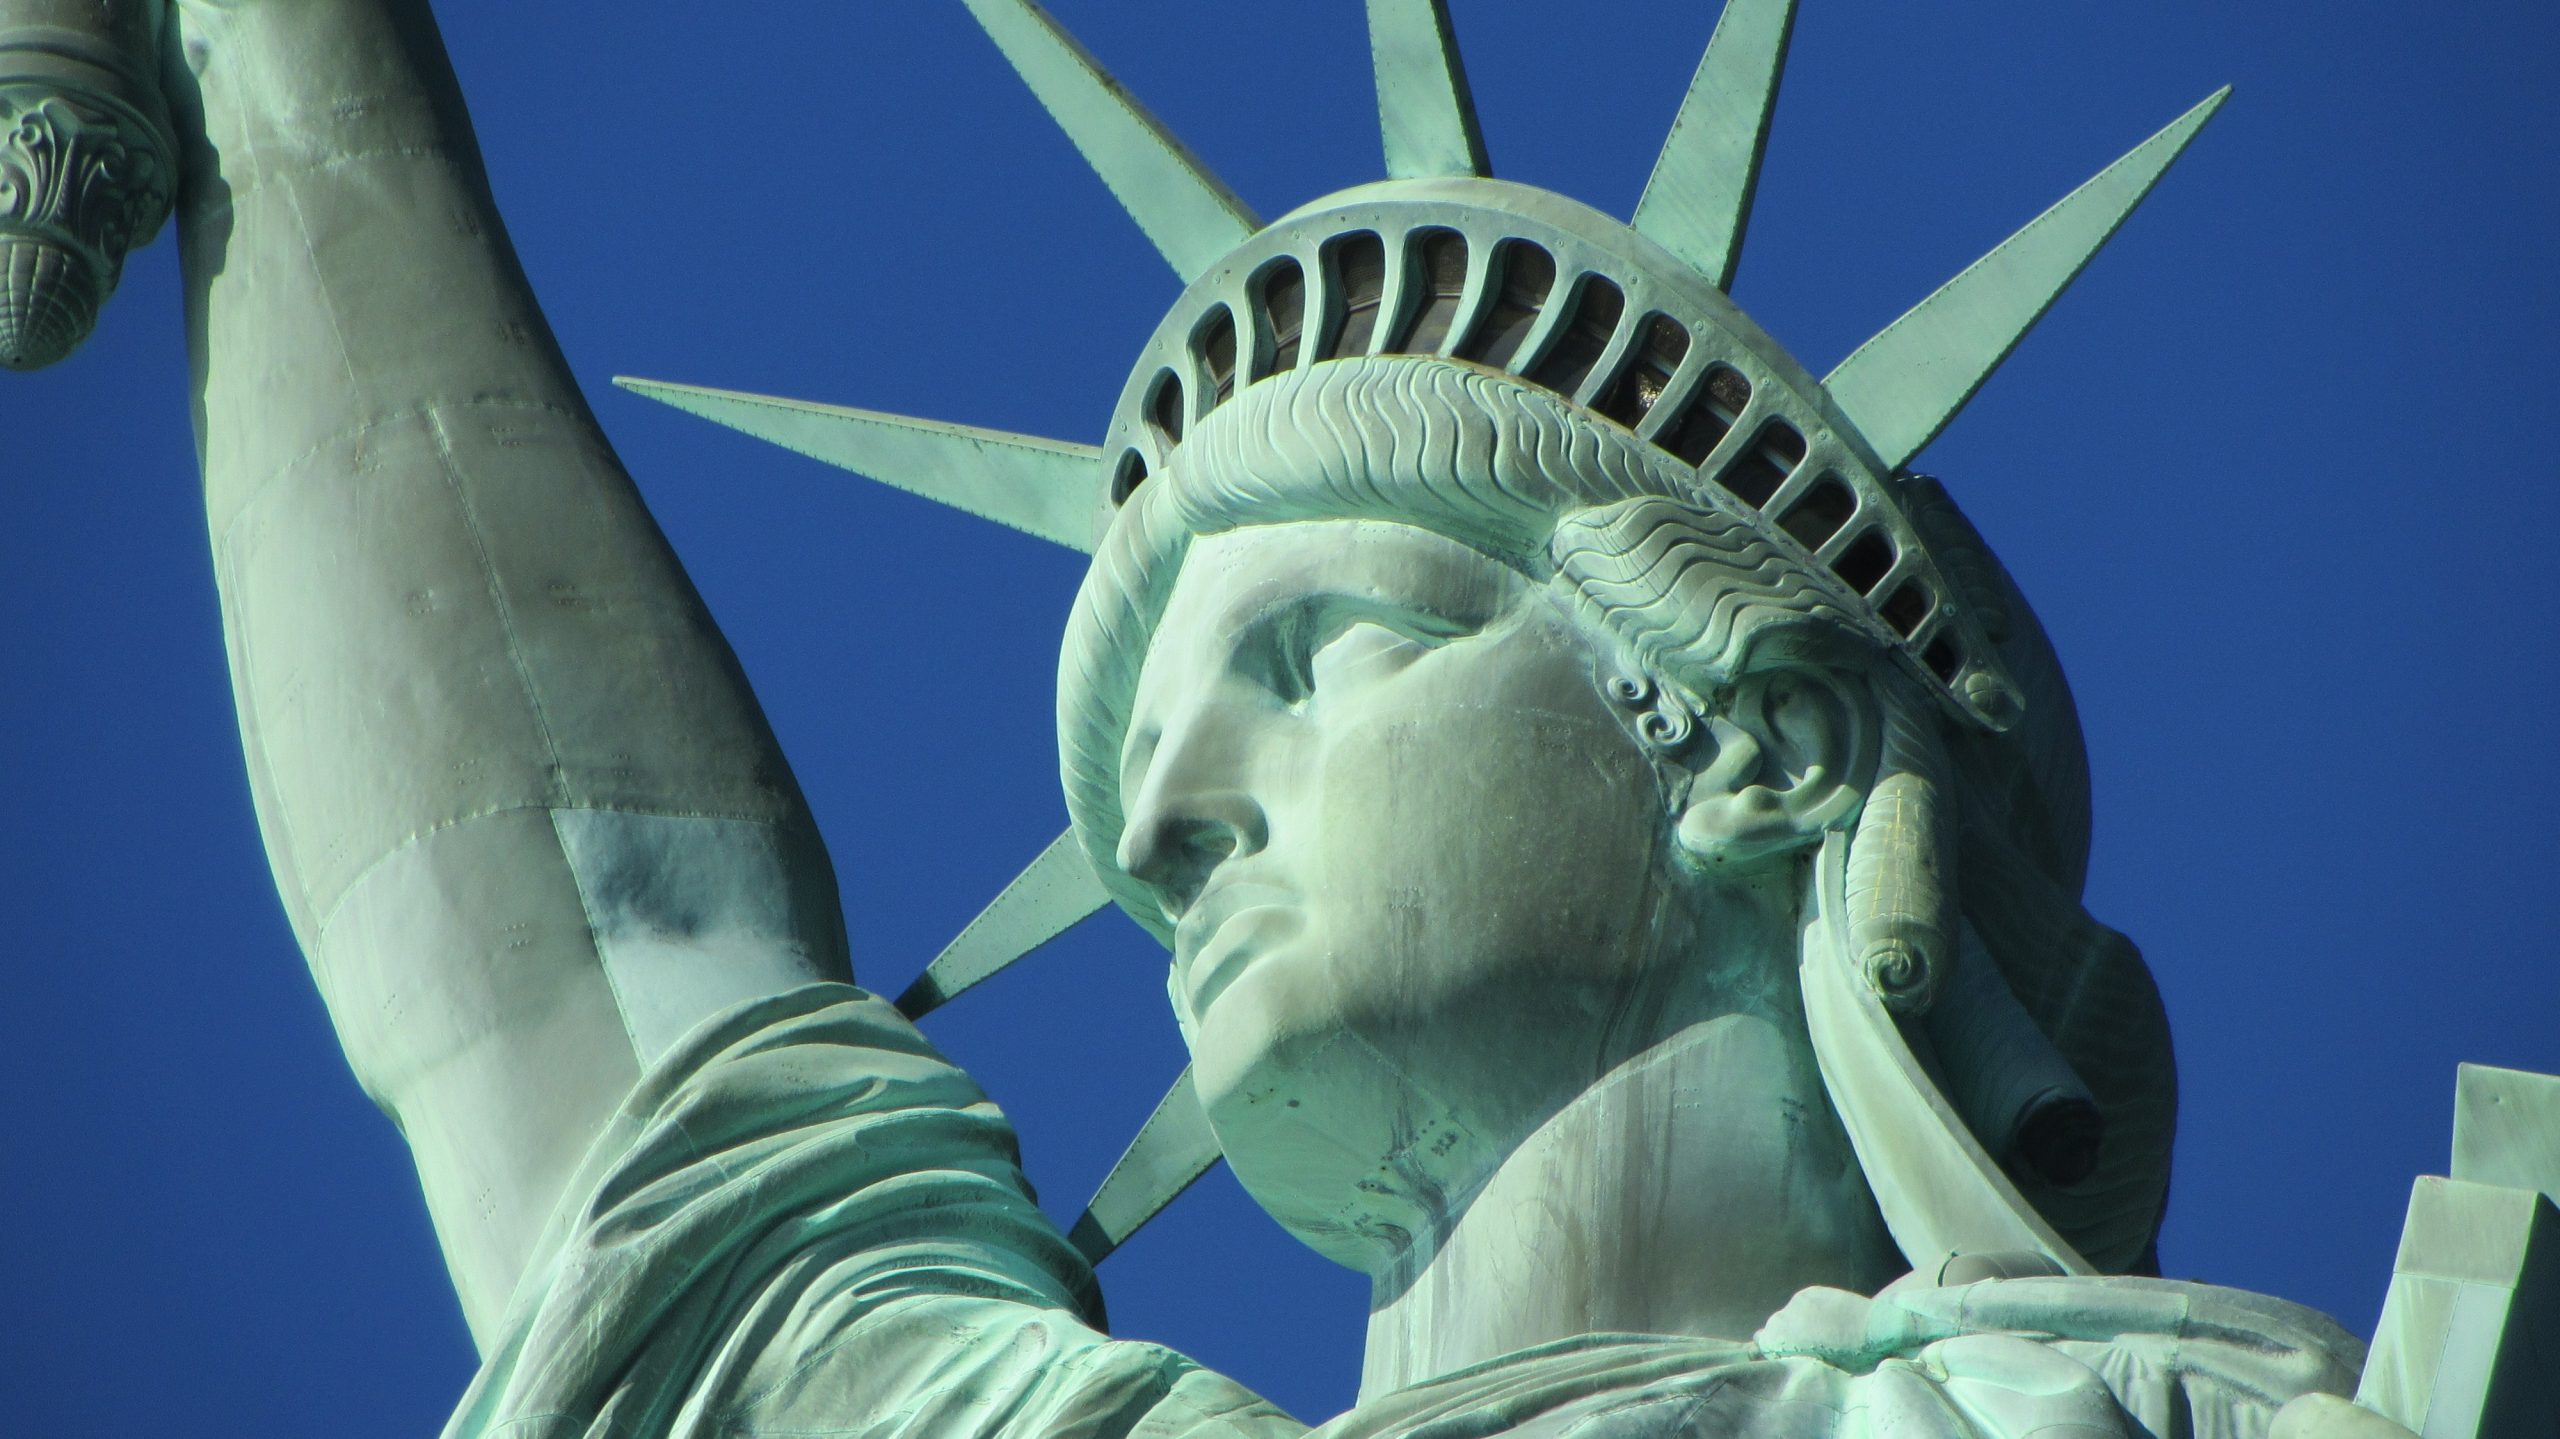 Statue of Liberty face up close